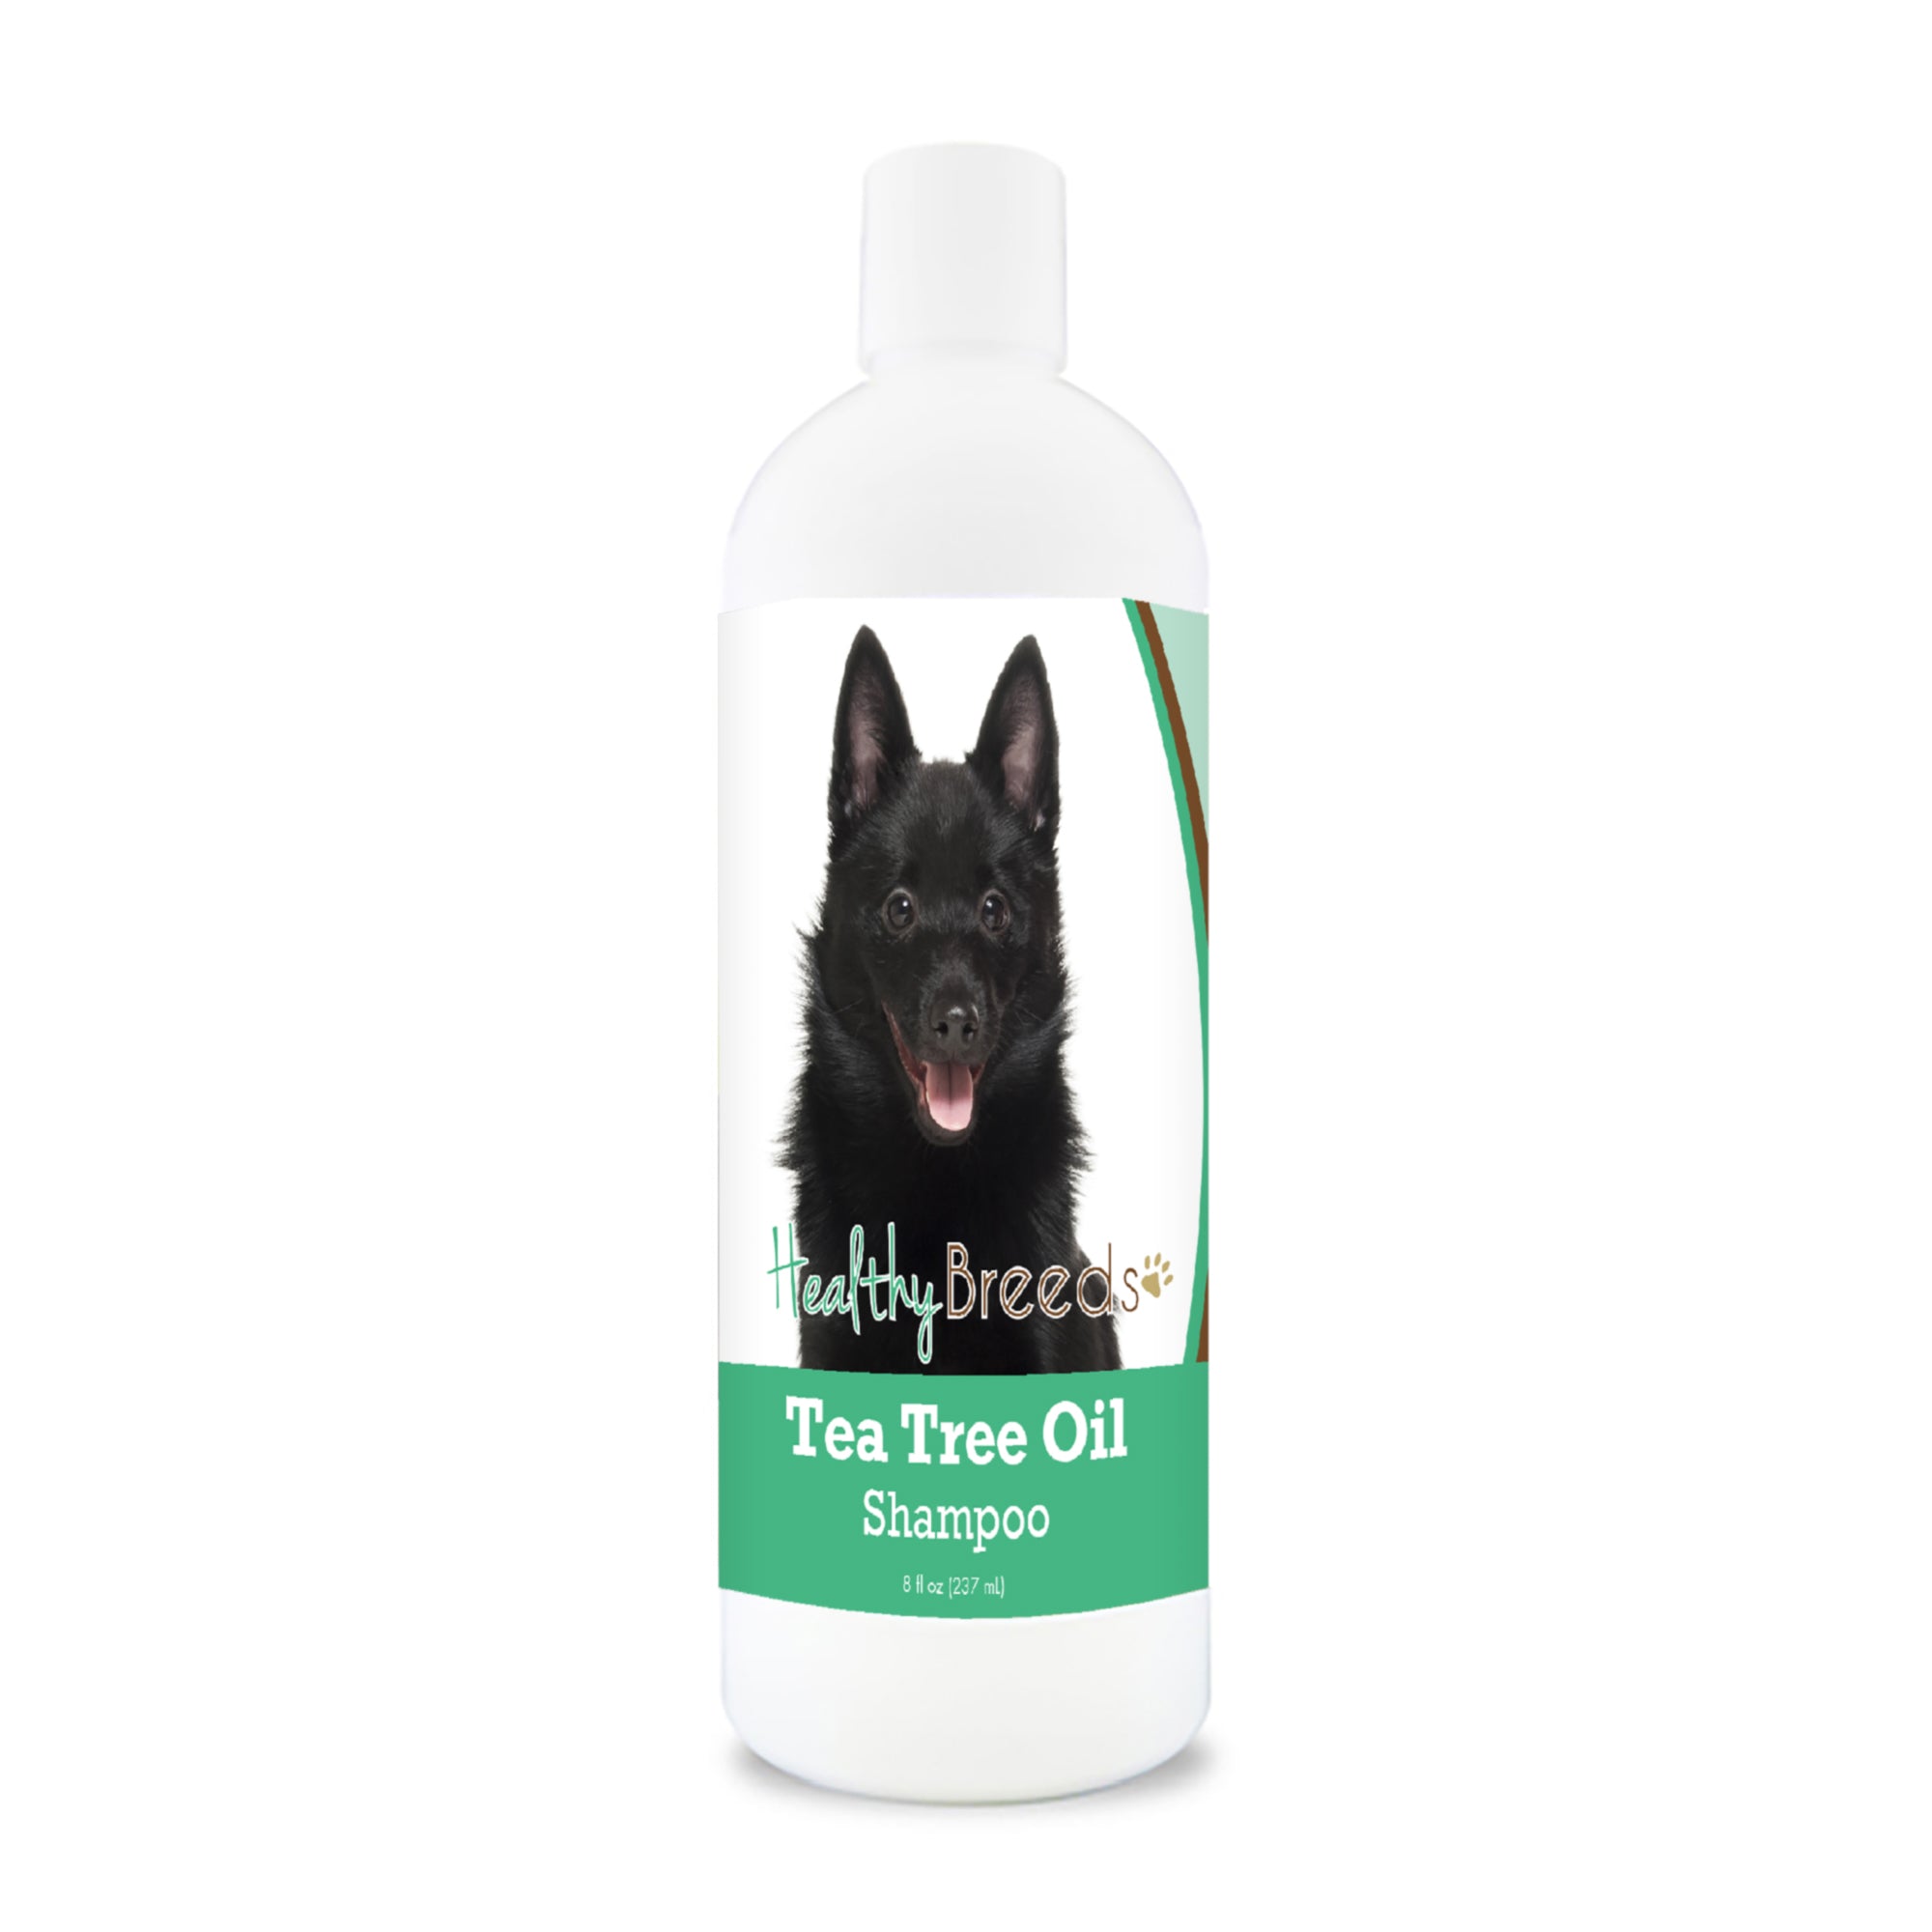 Schipperke Tea Tree Oil Shampoo 8 oz